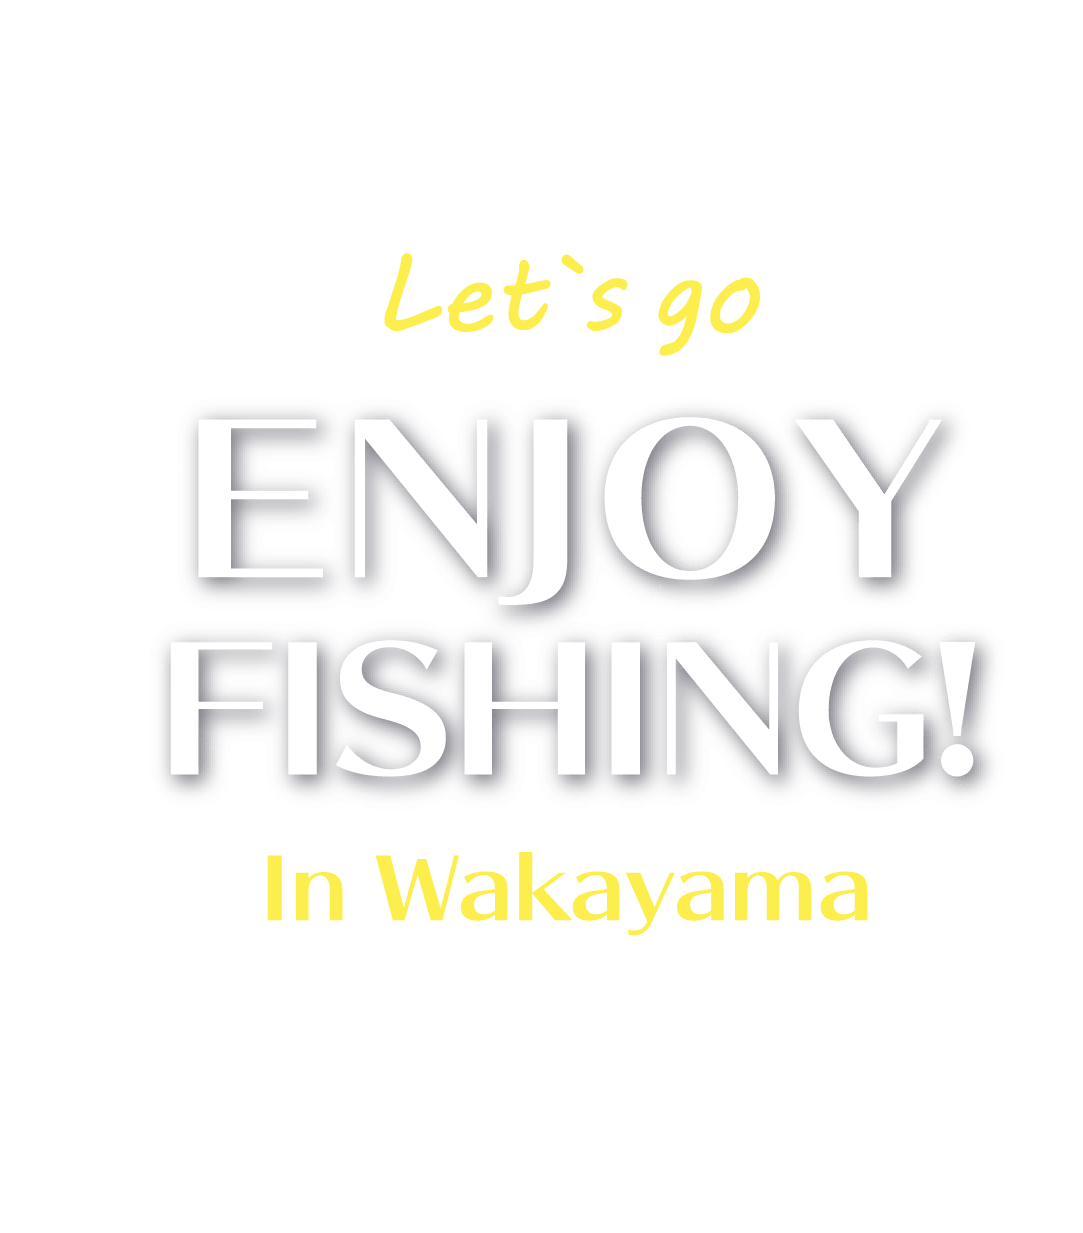 Let's ENJOY FISHING IN WAKAYAMA